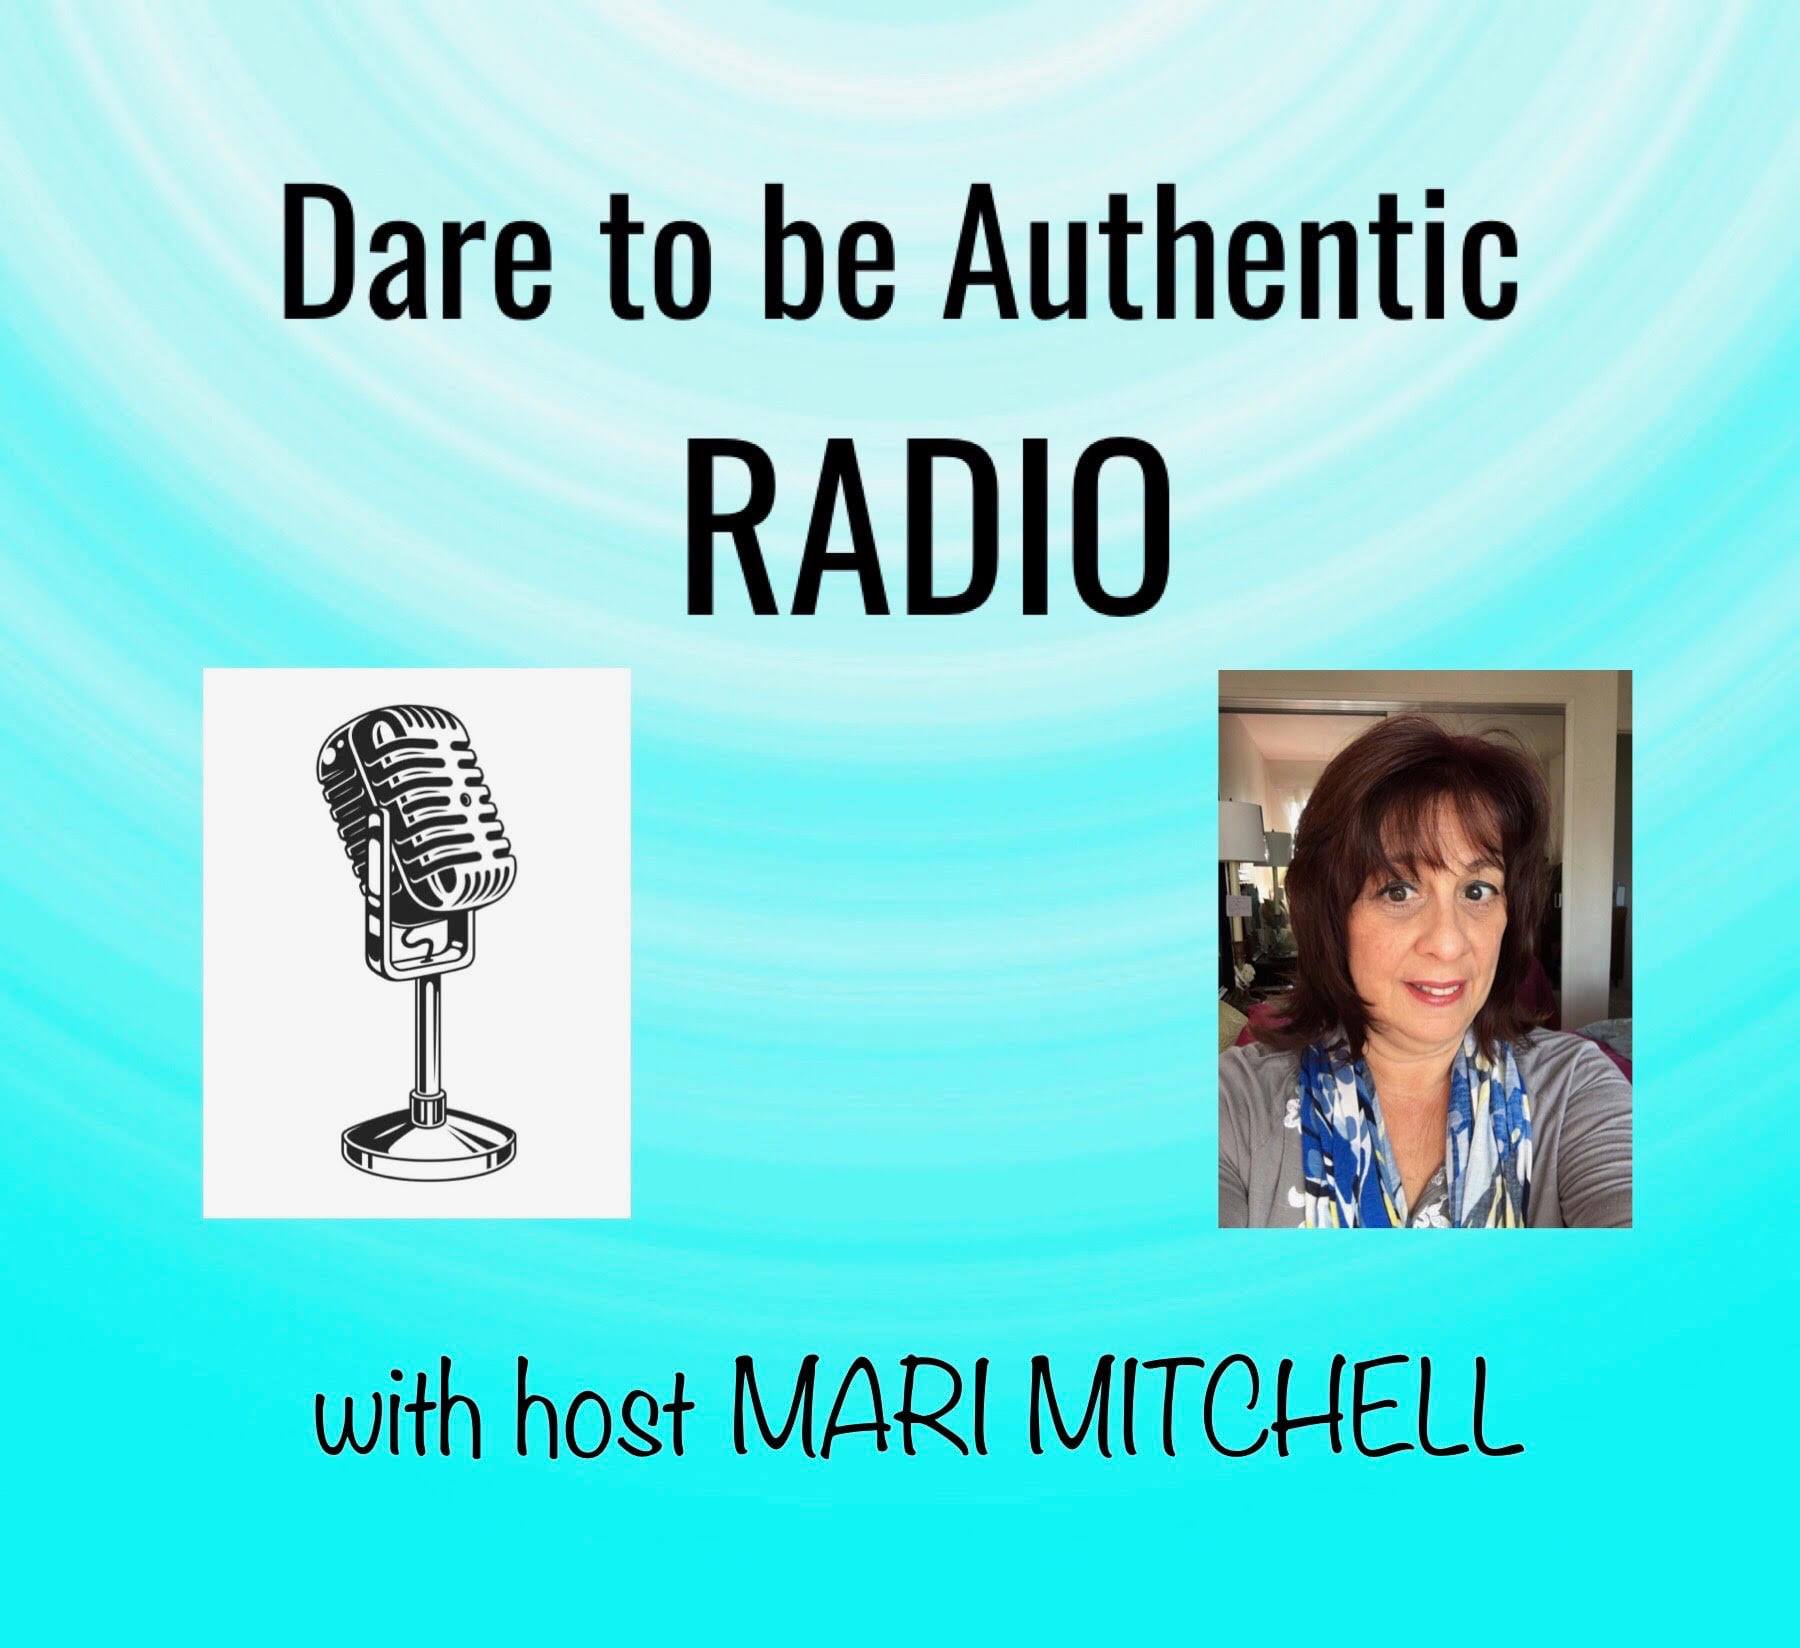 "Dare to be Authentic RADIO with host Mari Mitchell"